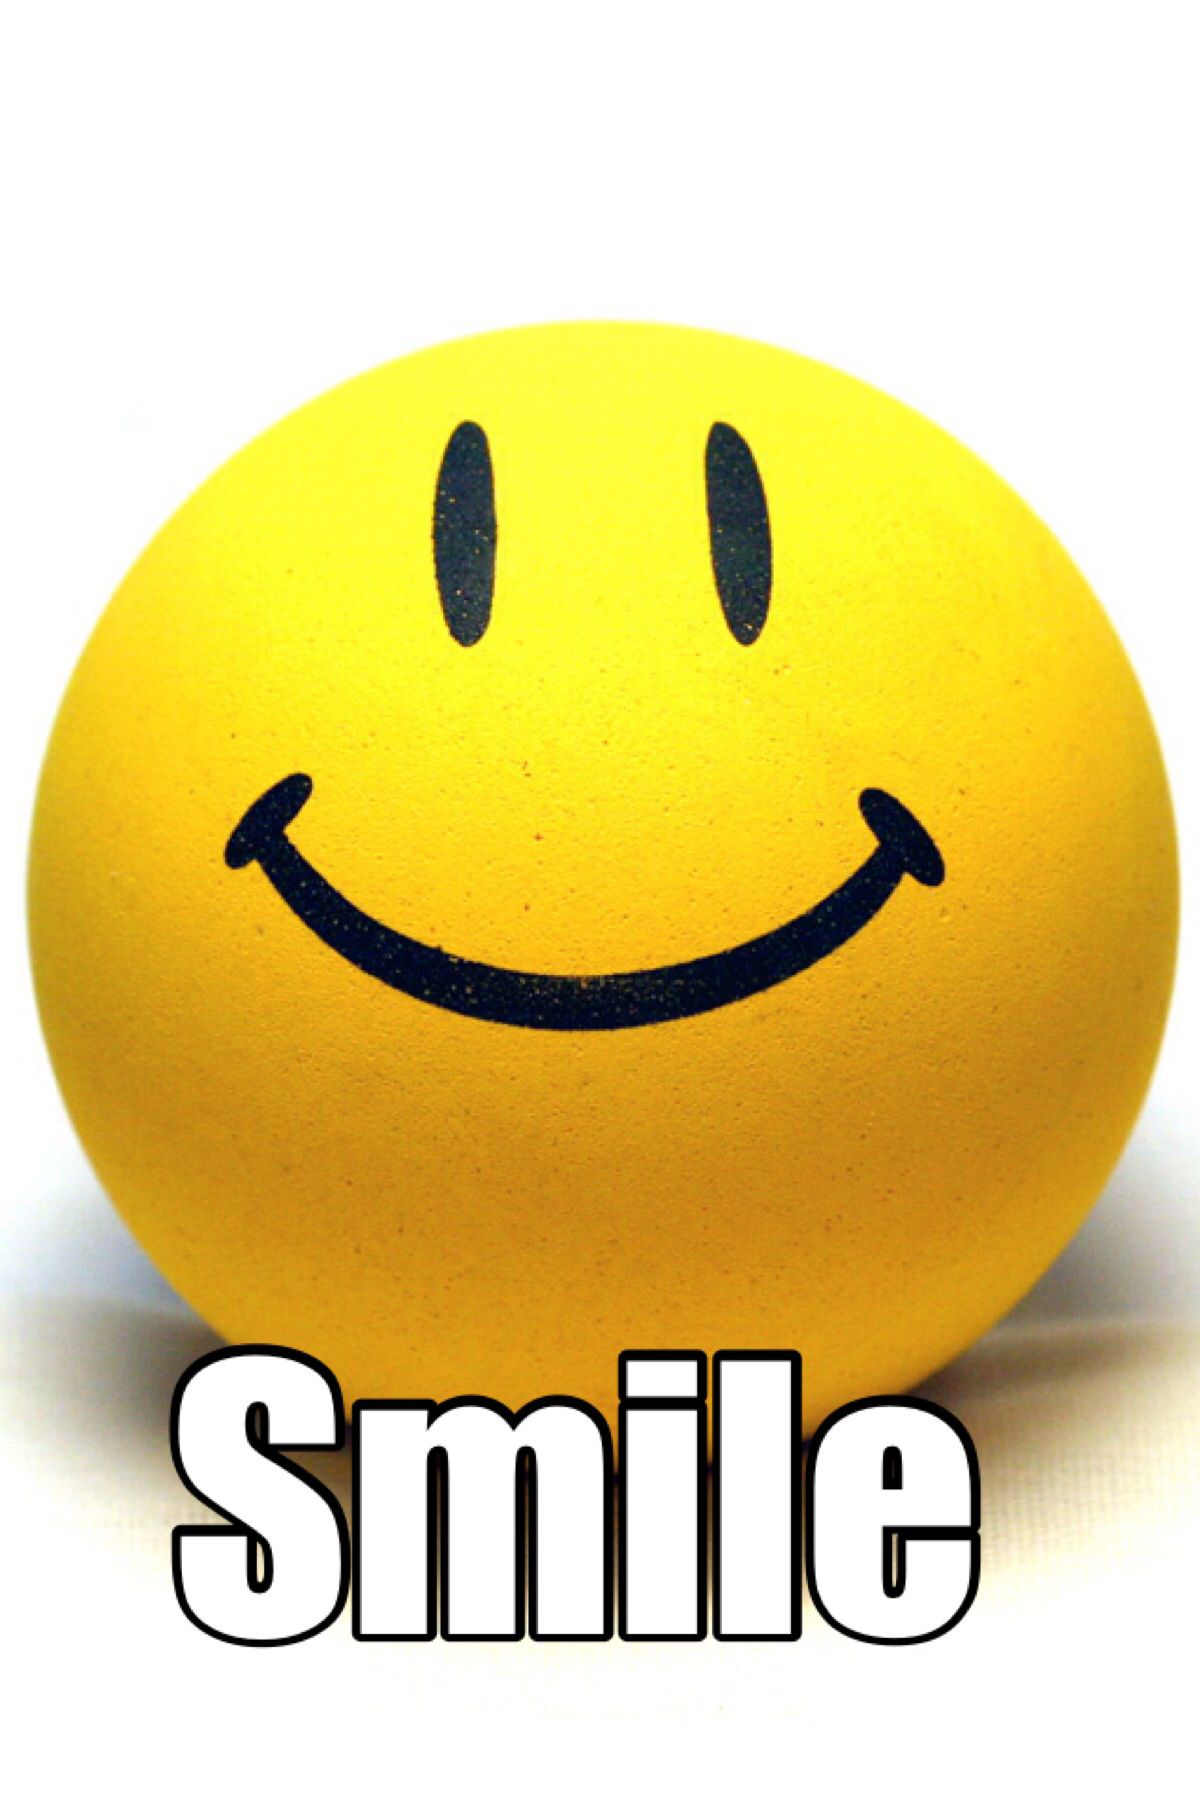 Smile Smiley Faces Wallpaper Happy Quotes